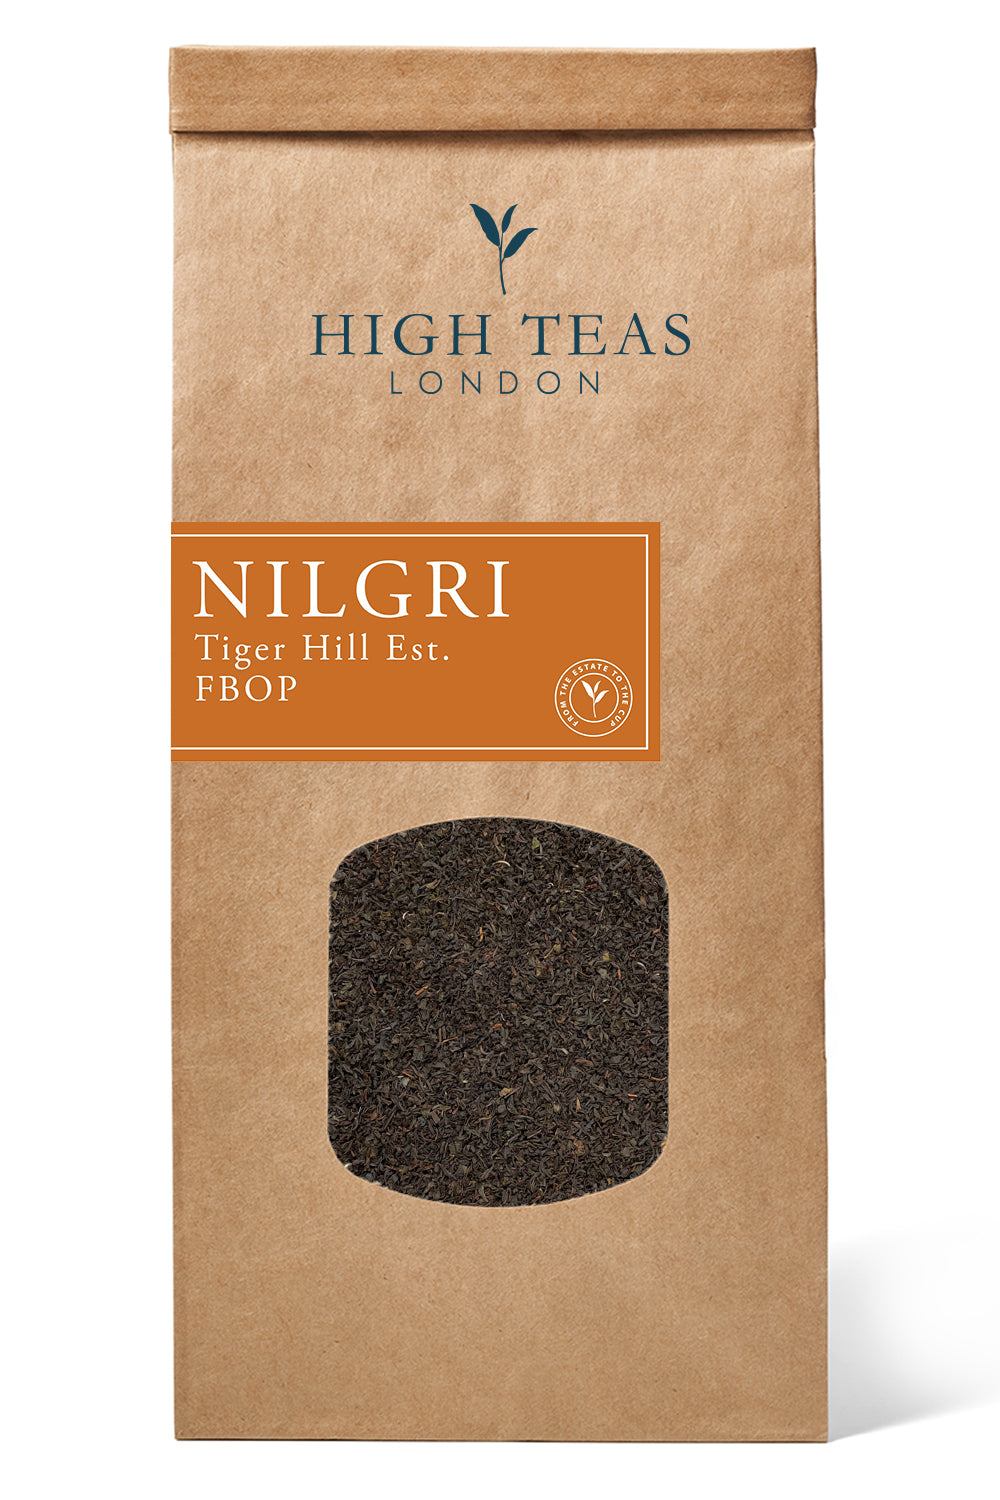 Nilgiri - Tiger Hill FBOP-250g-Loose Leaf Tea-High Teas